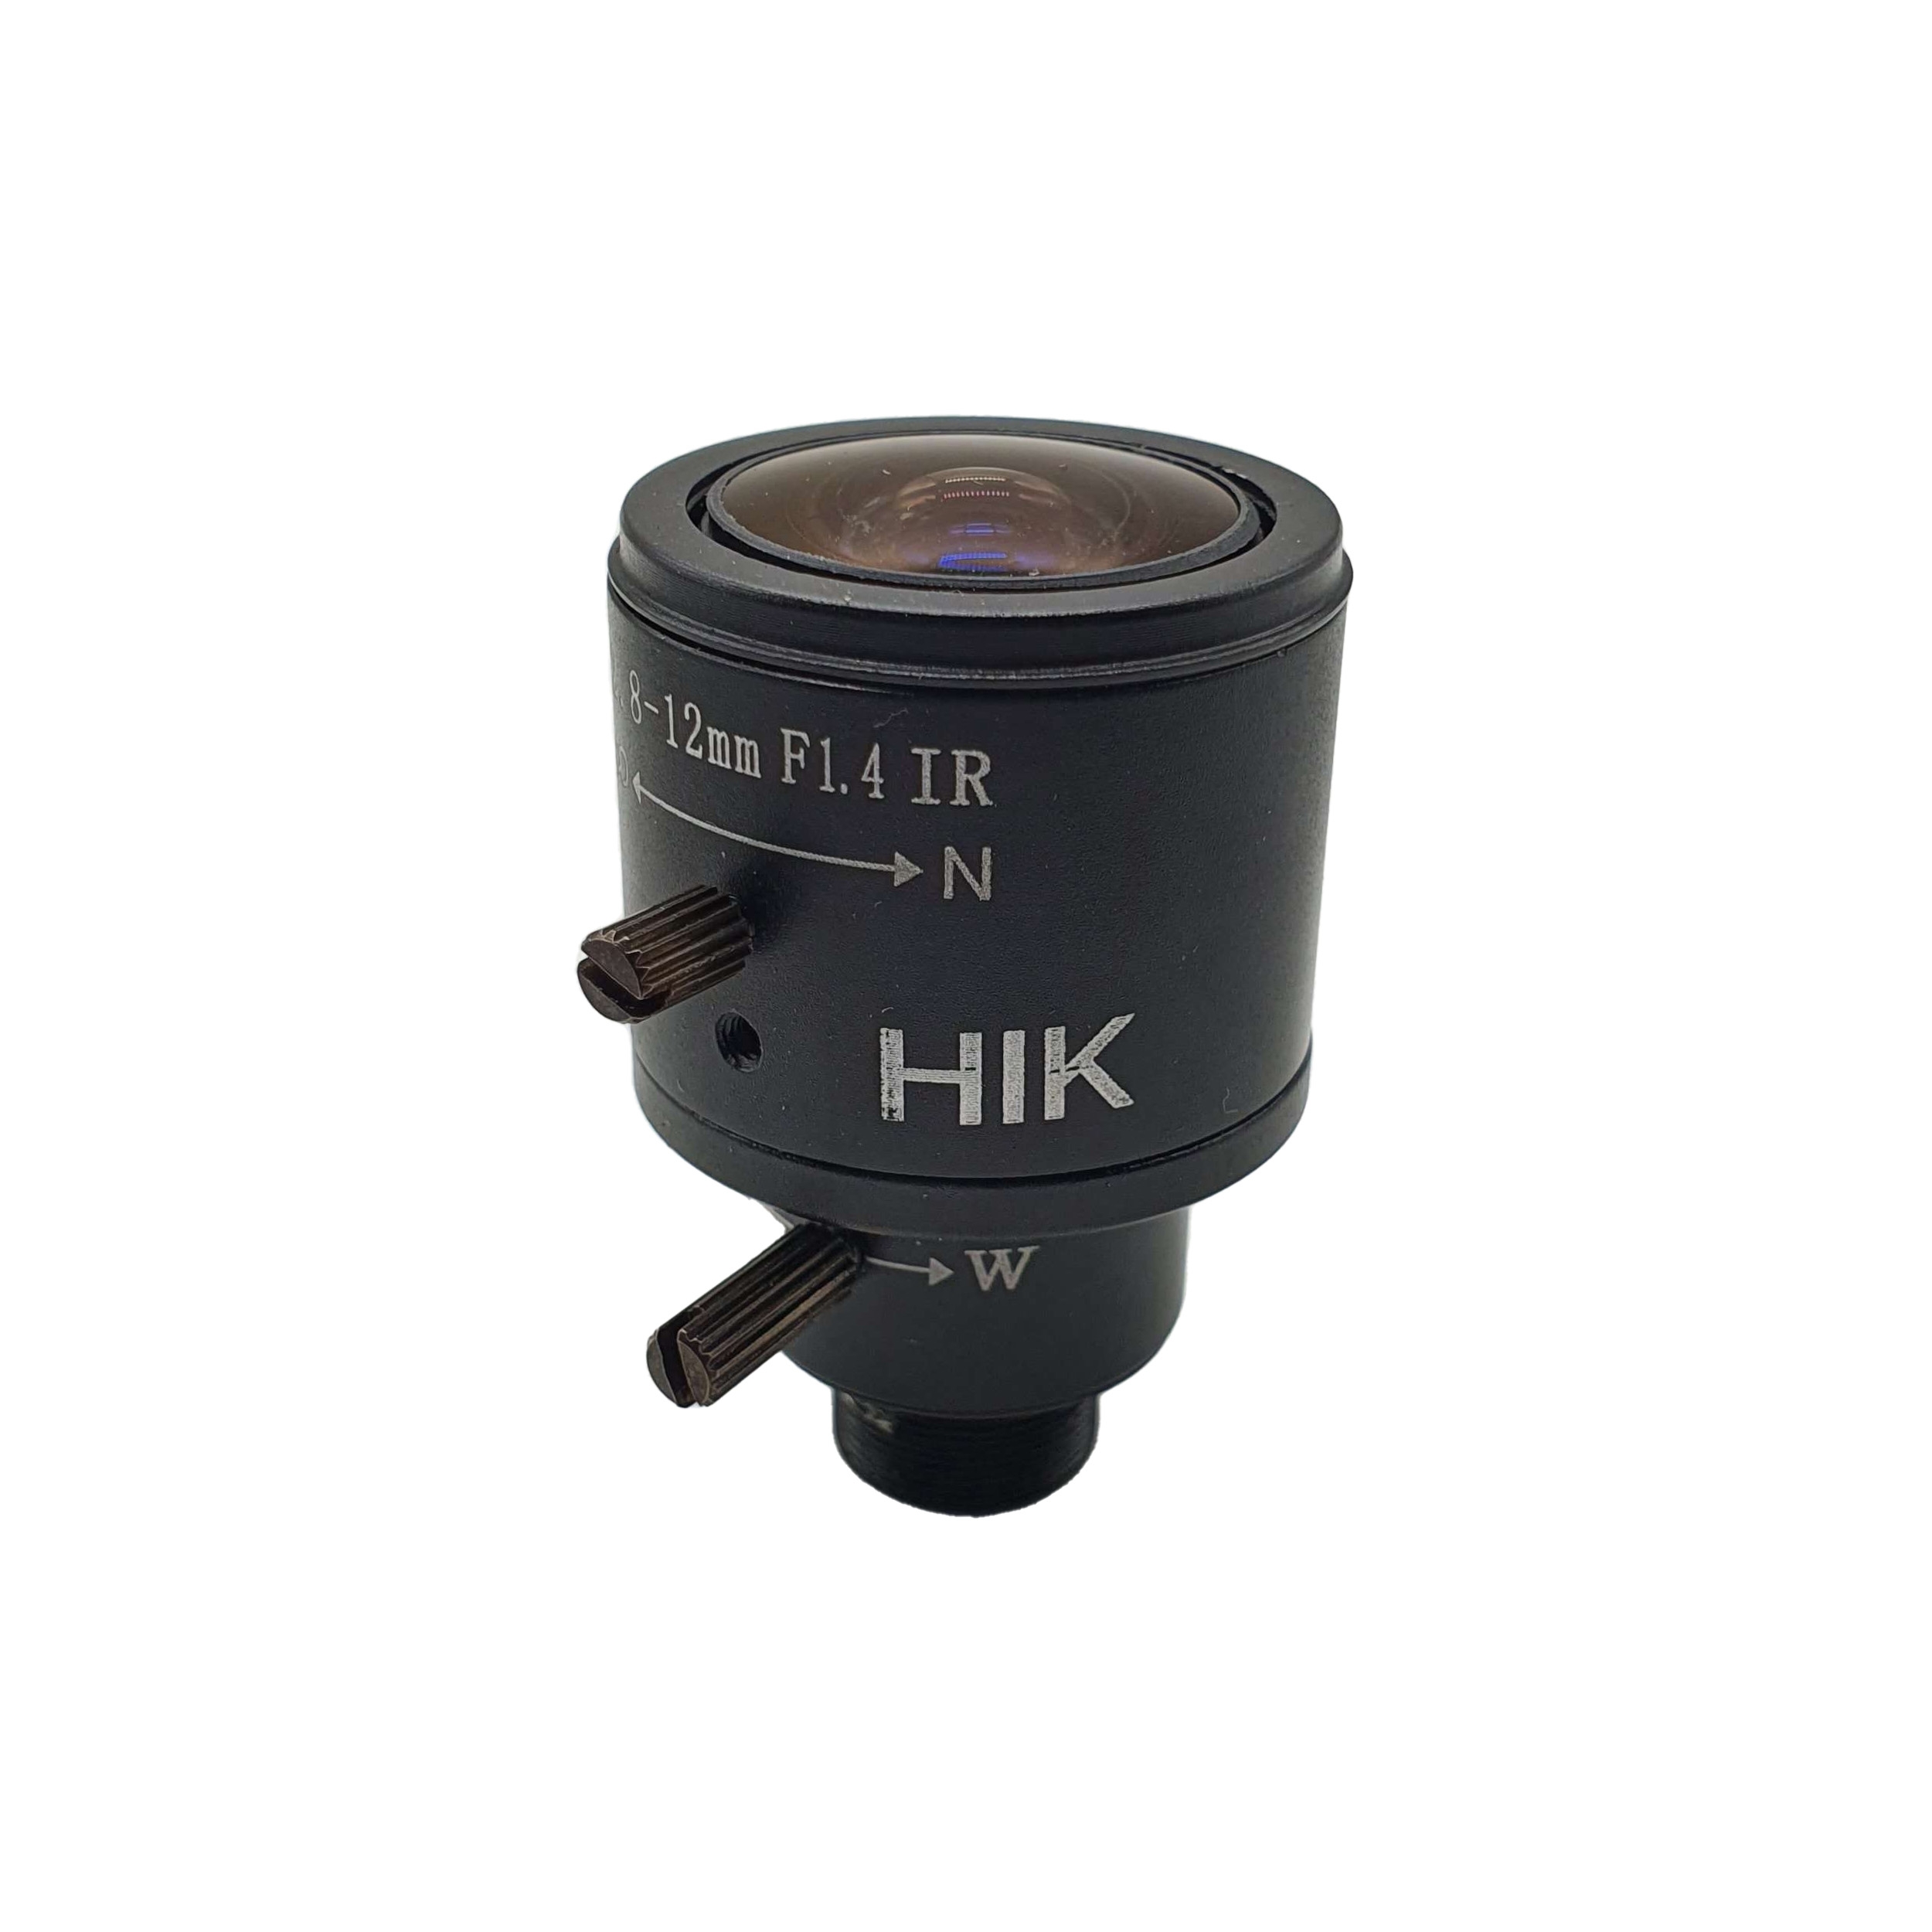 لنز دوربین مداربسته هایک مدل 2.8-12mm